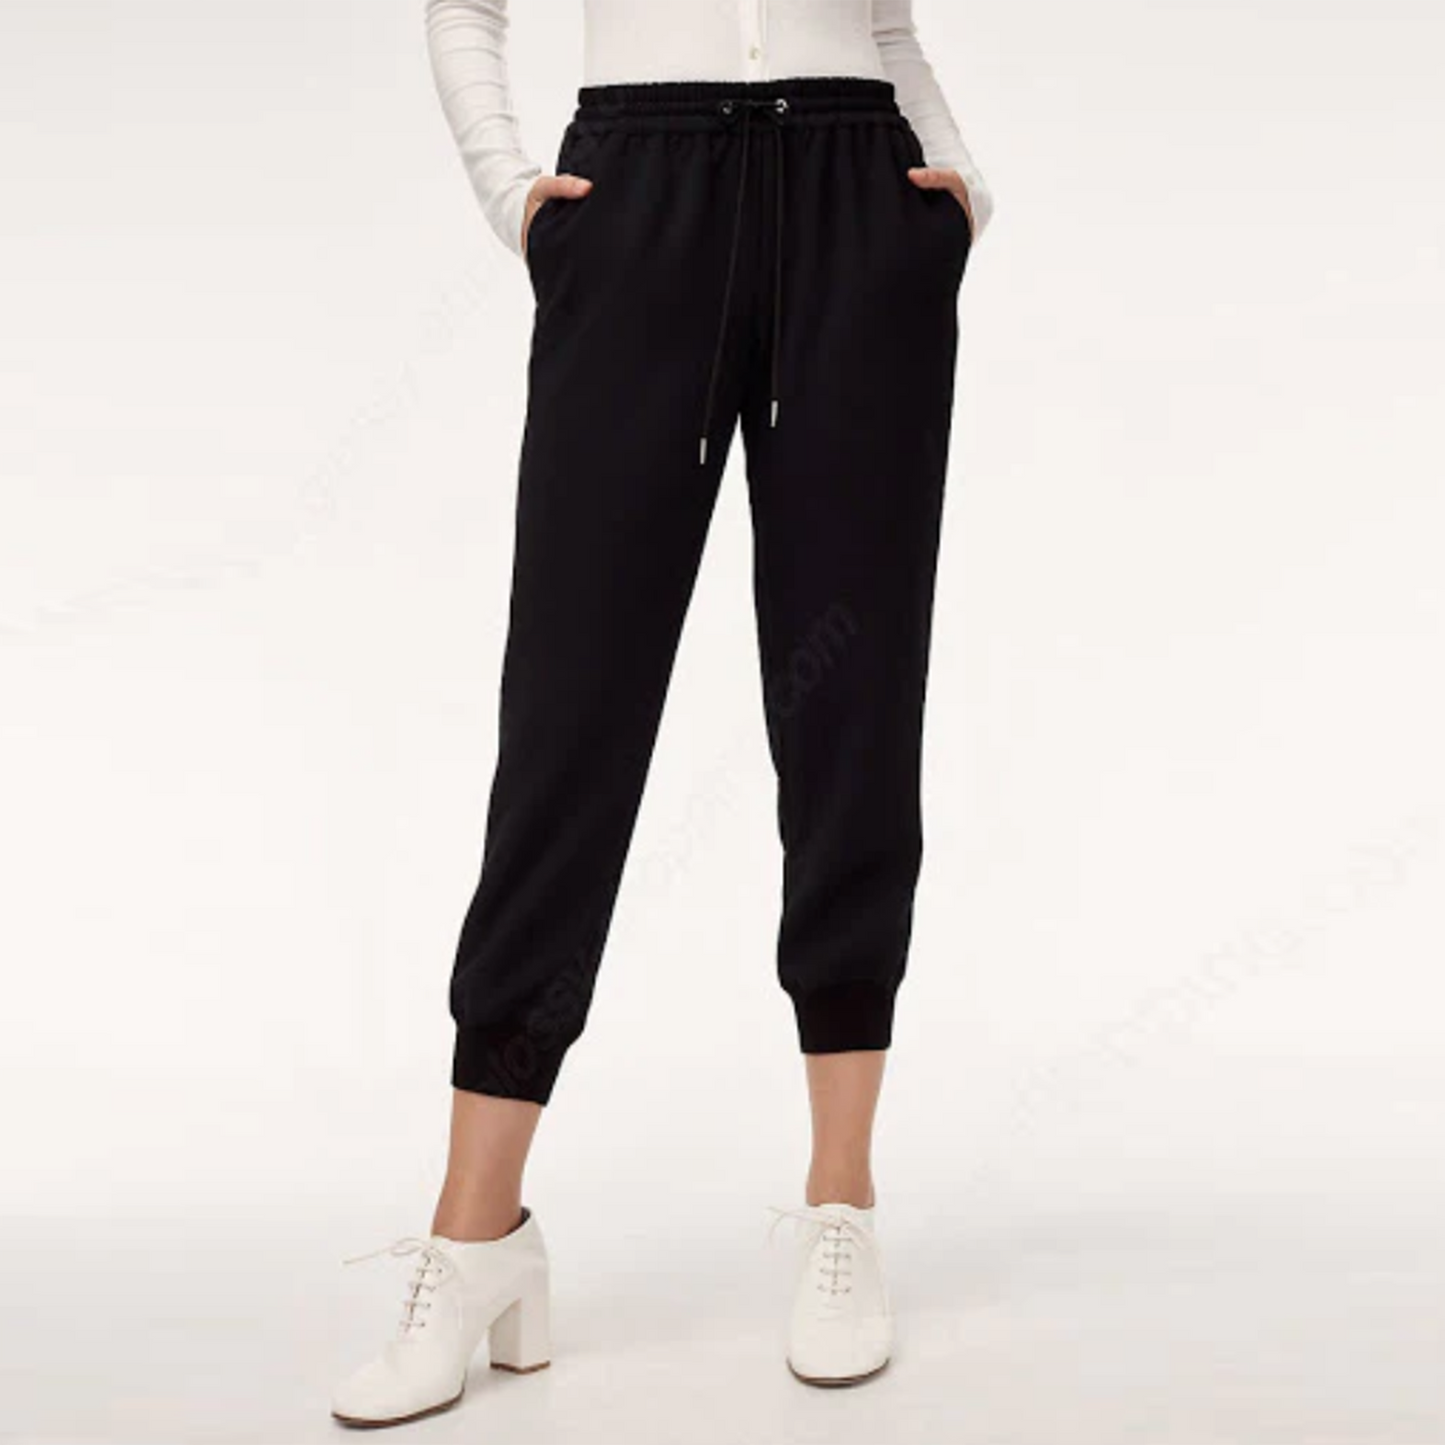 wilfred black buffon pants trouser joggers - size 10